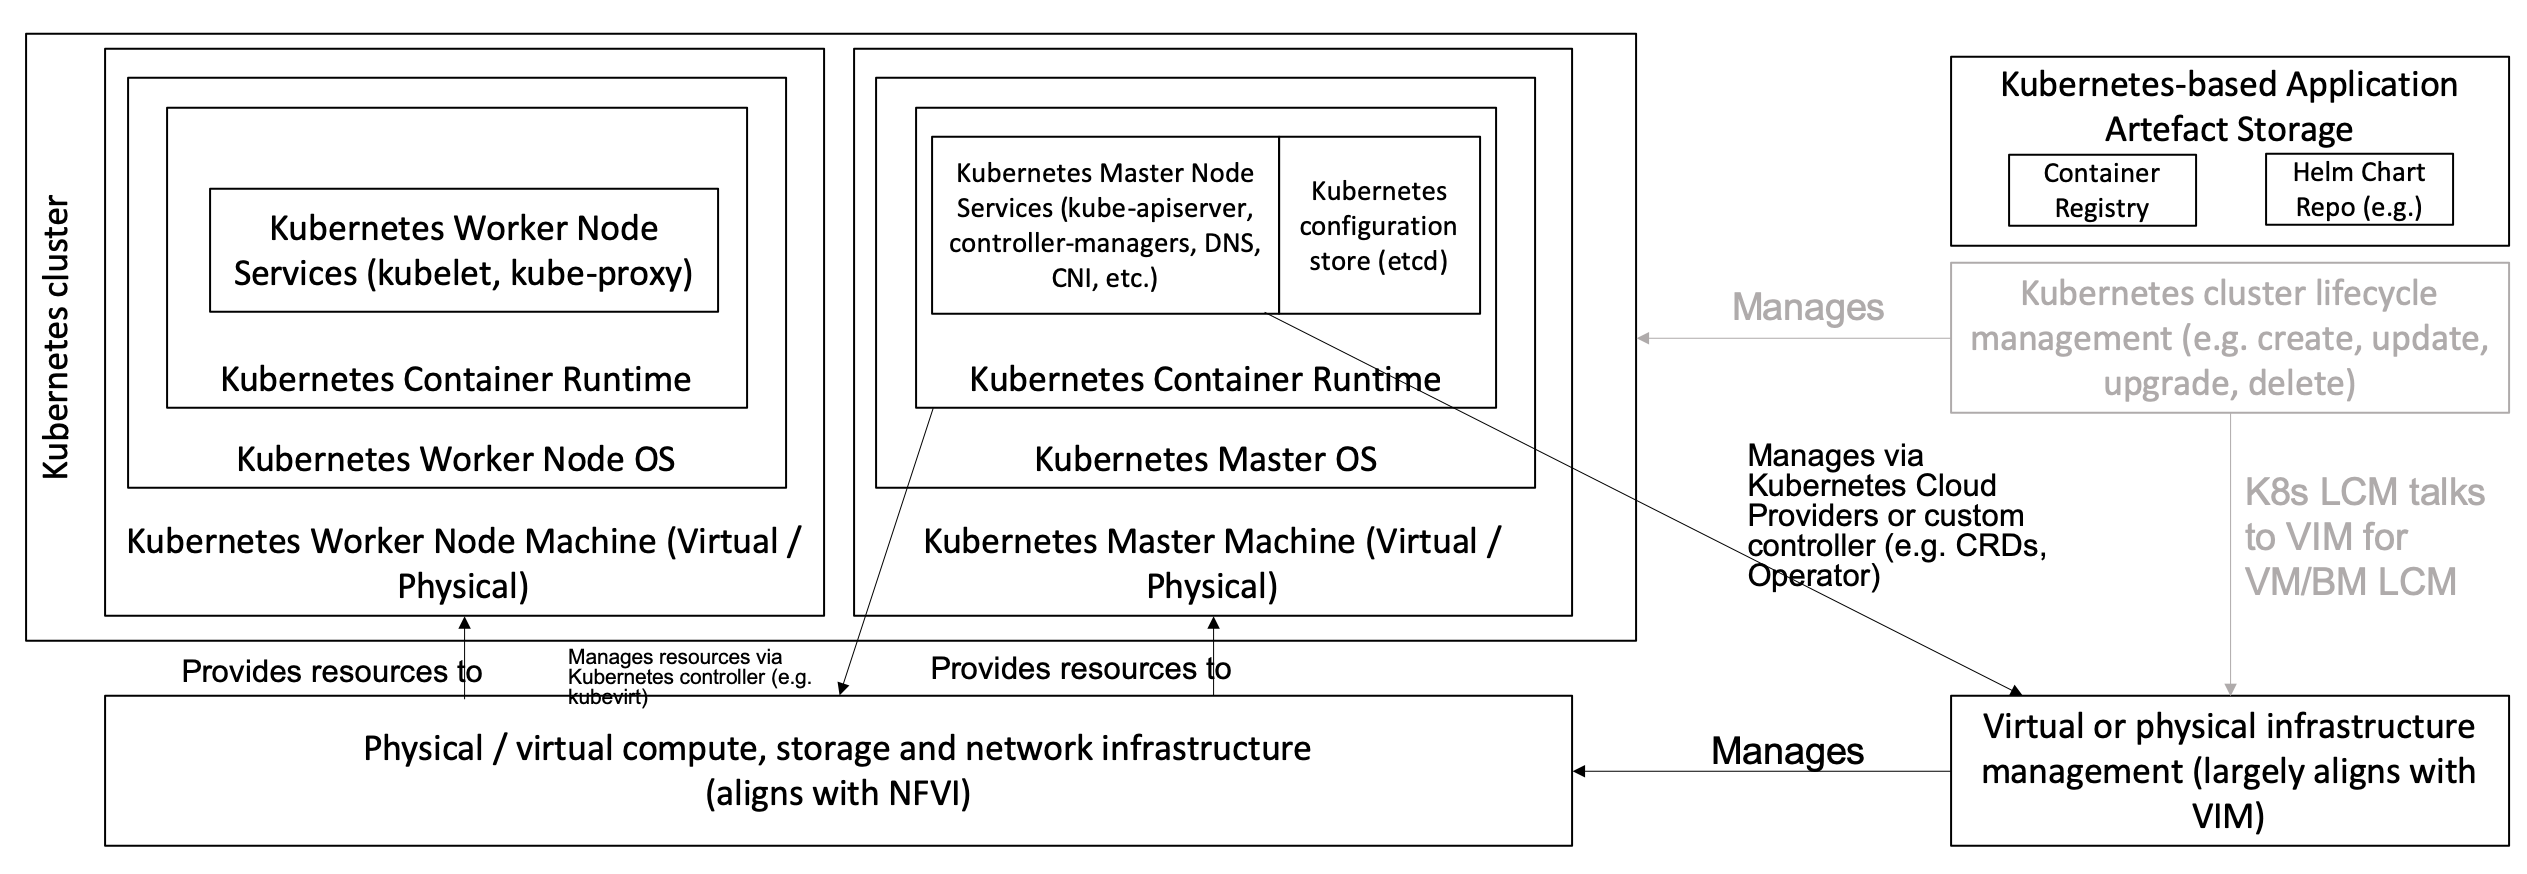 "Figure 4-1: Kubernetes Reference Architecture"